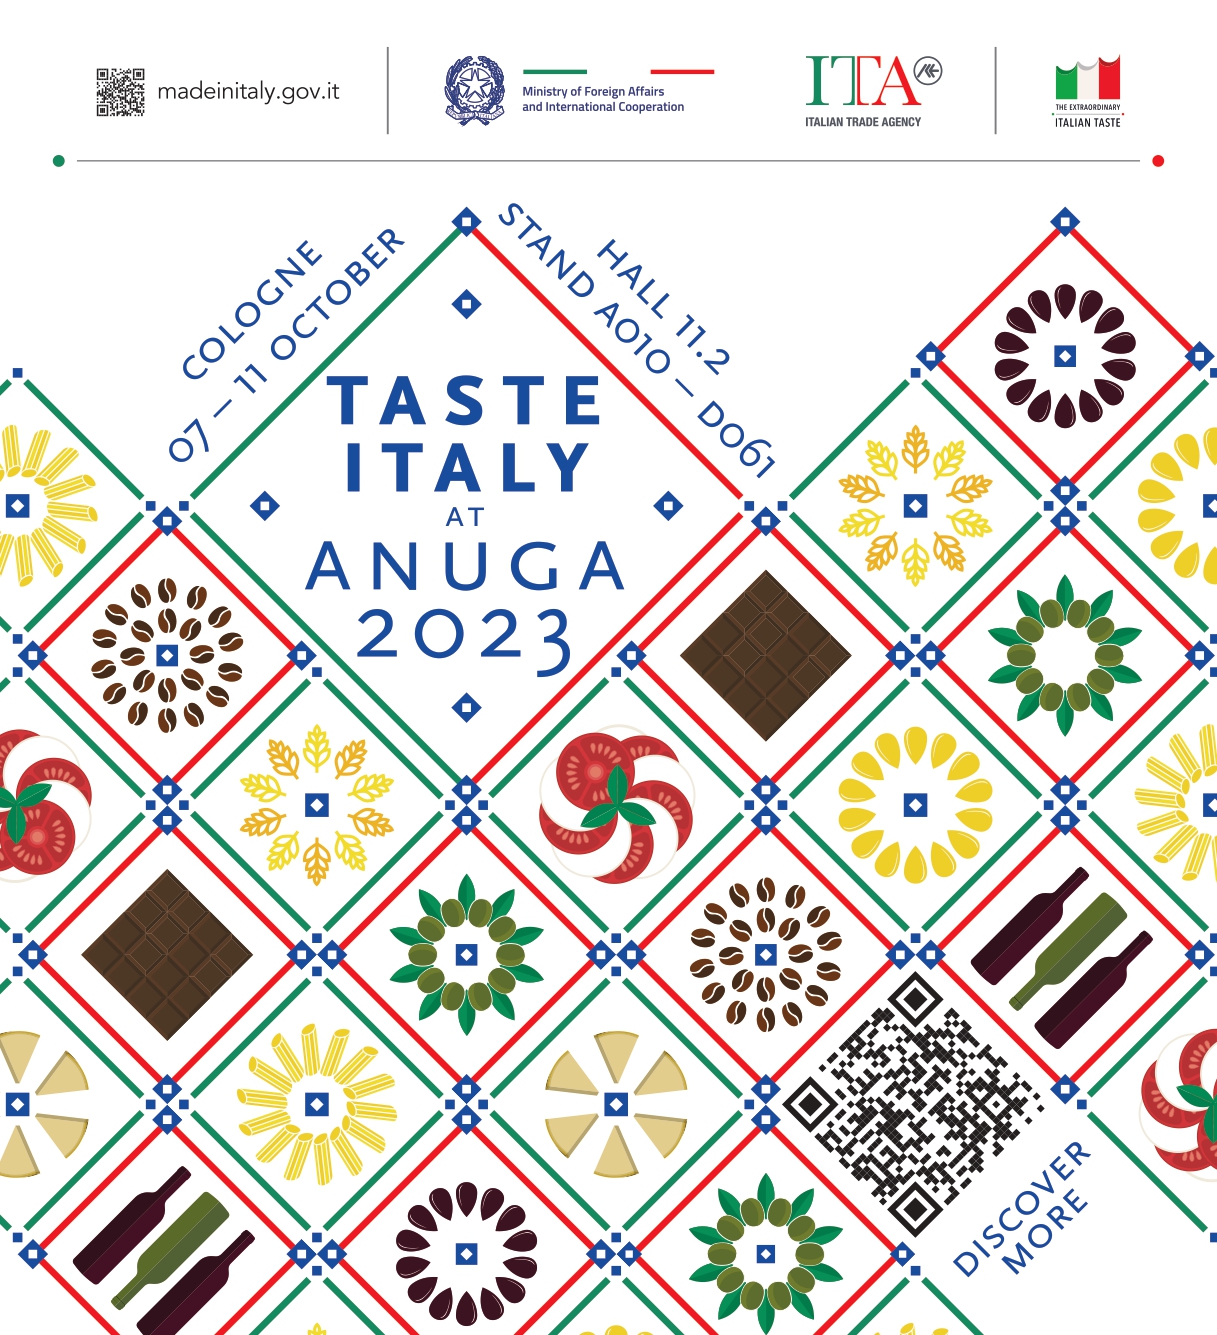 Taste Italy at Anuga 2023